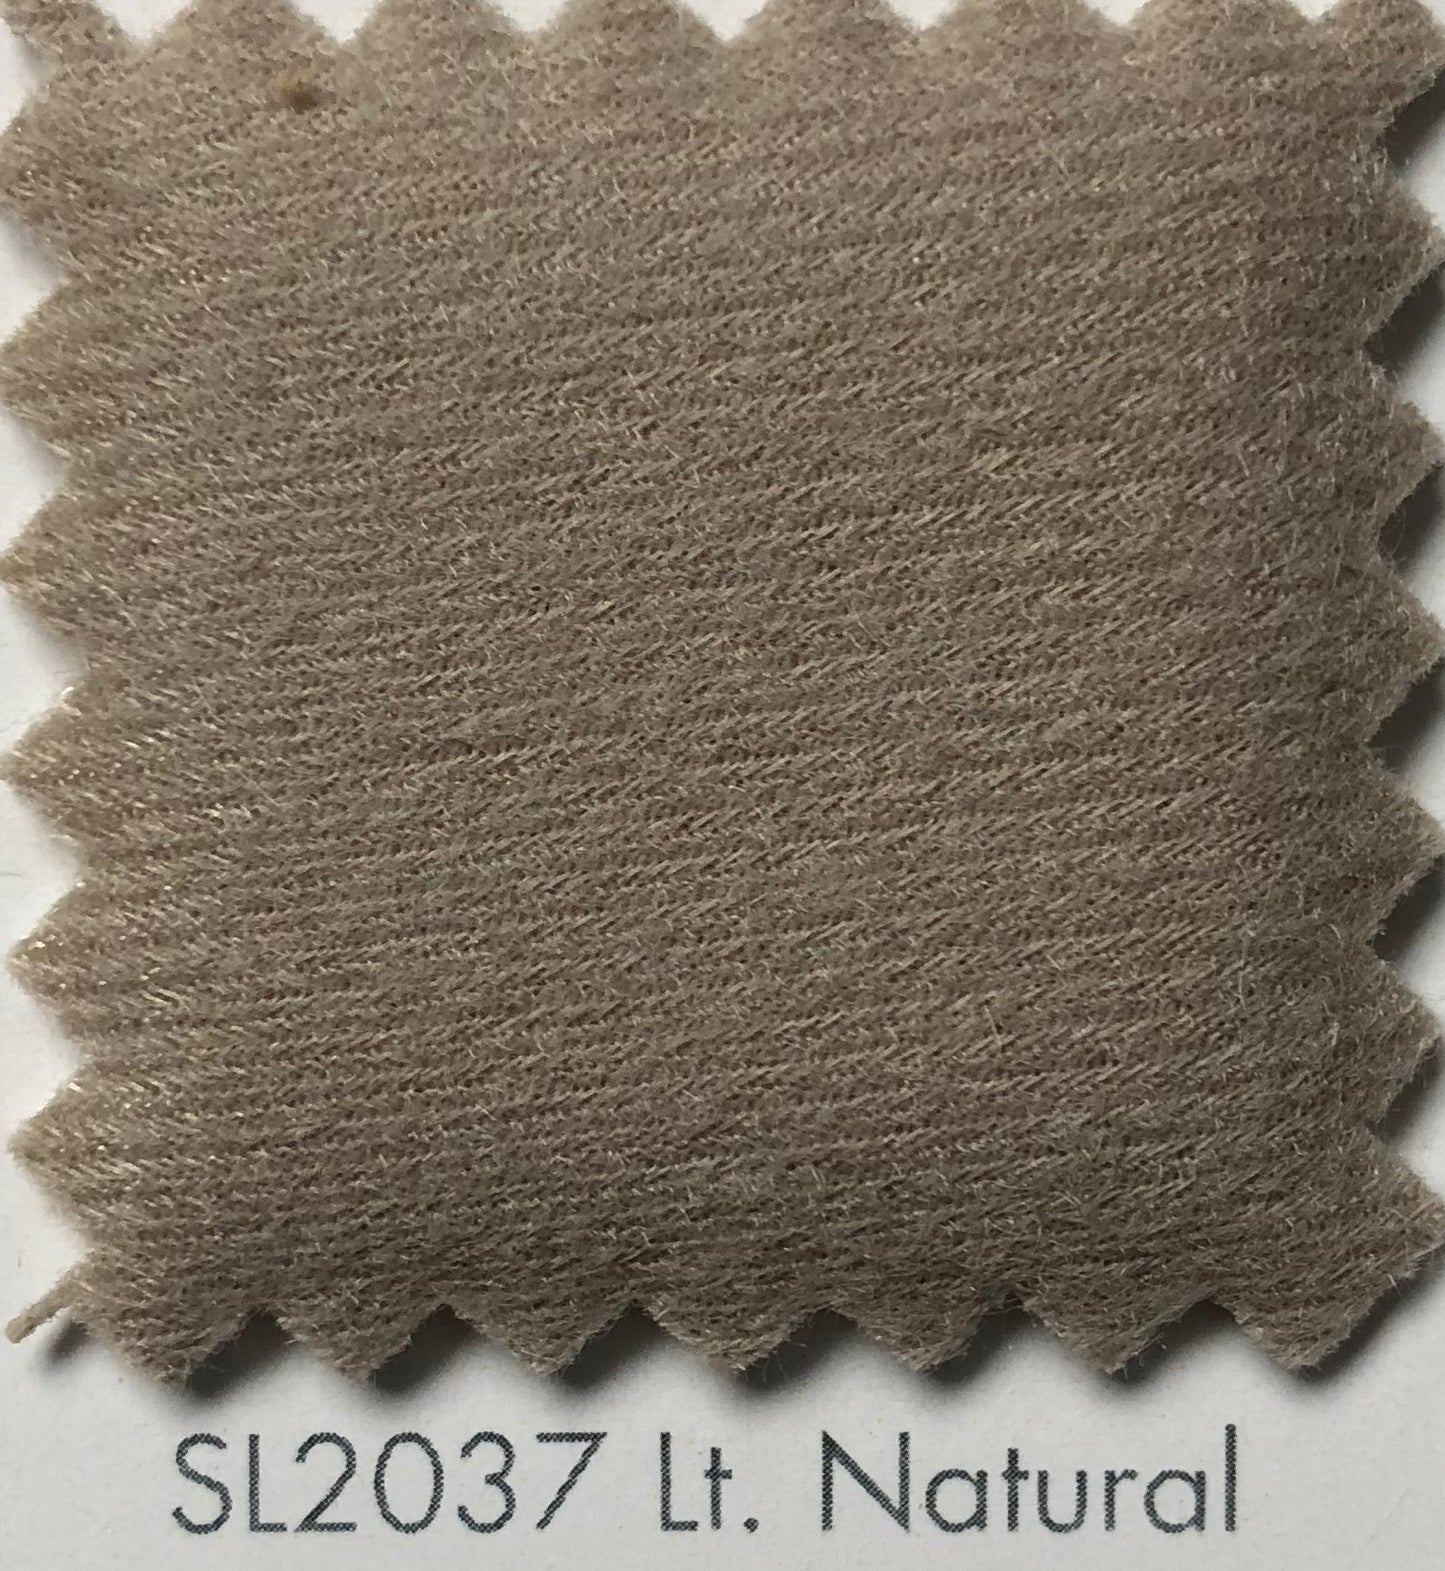 SL2037 Lt. Natural Headliner Fabric